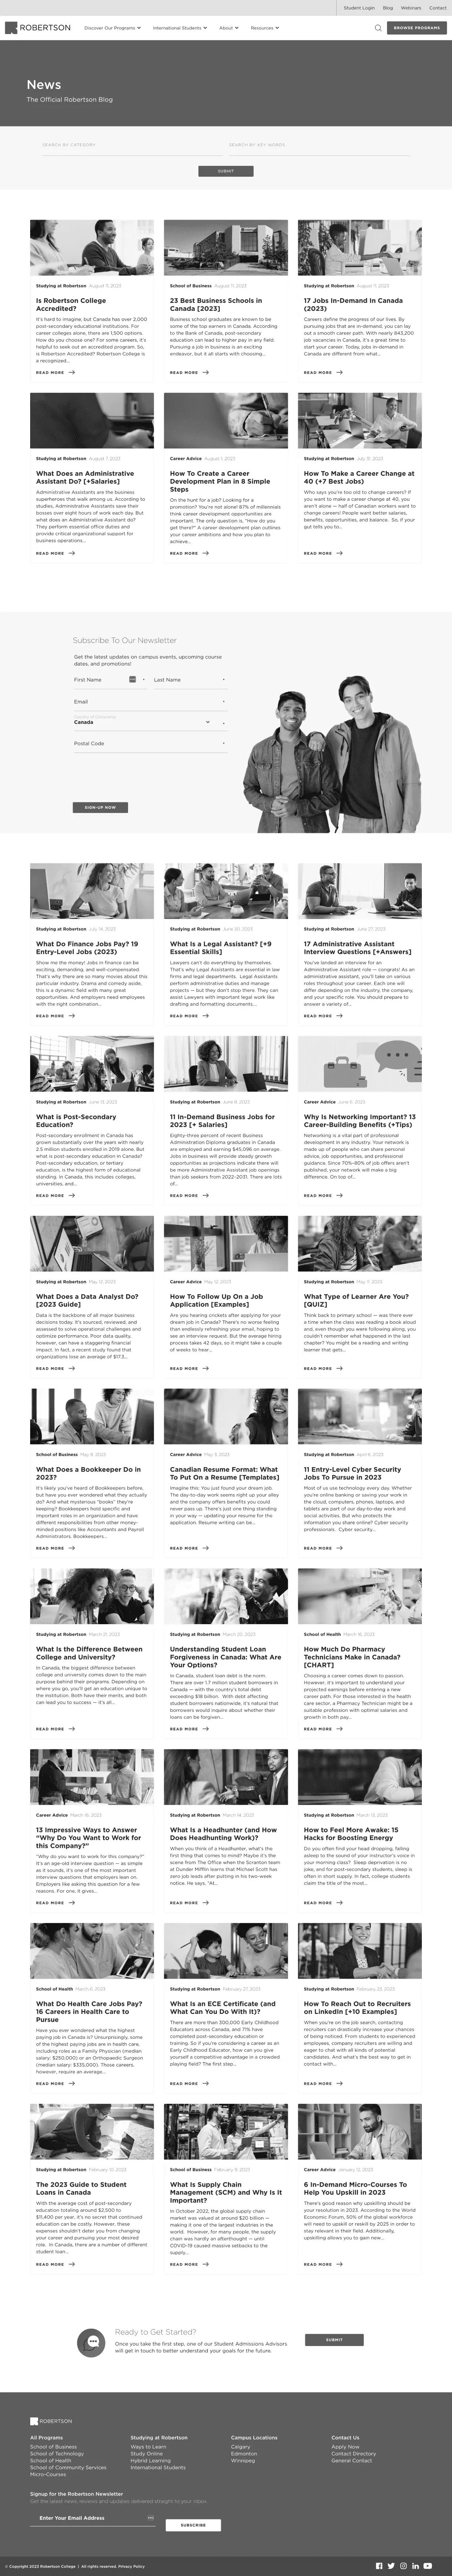 Screenshot of Robertson College's blog hub before redesign